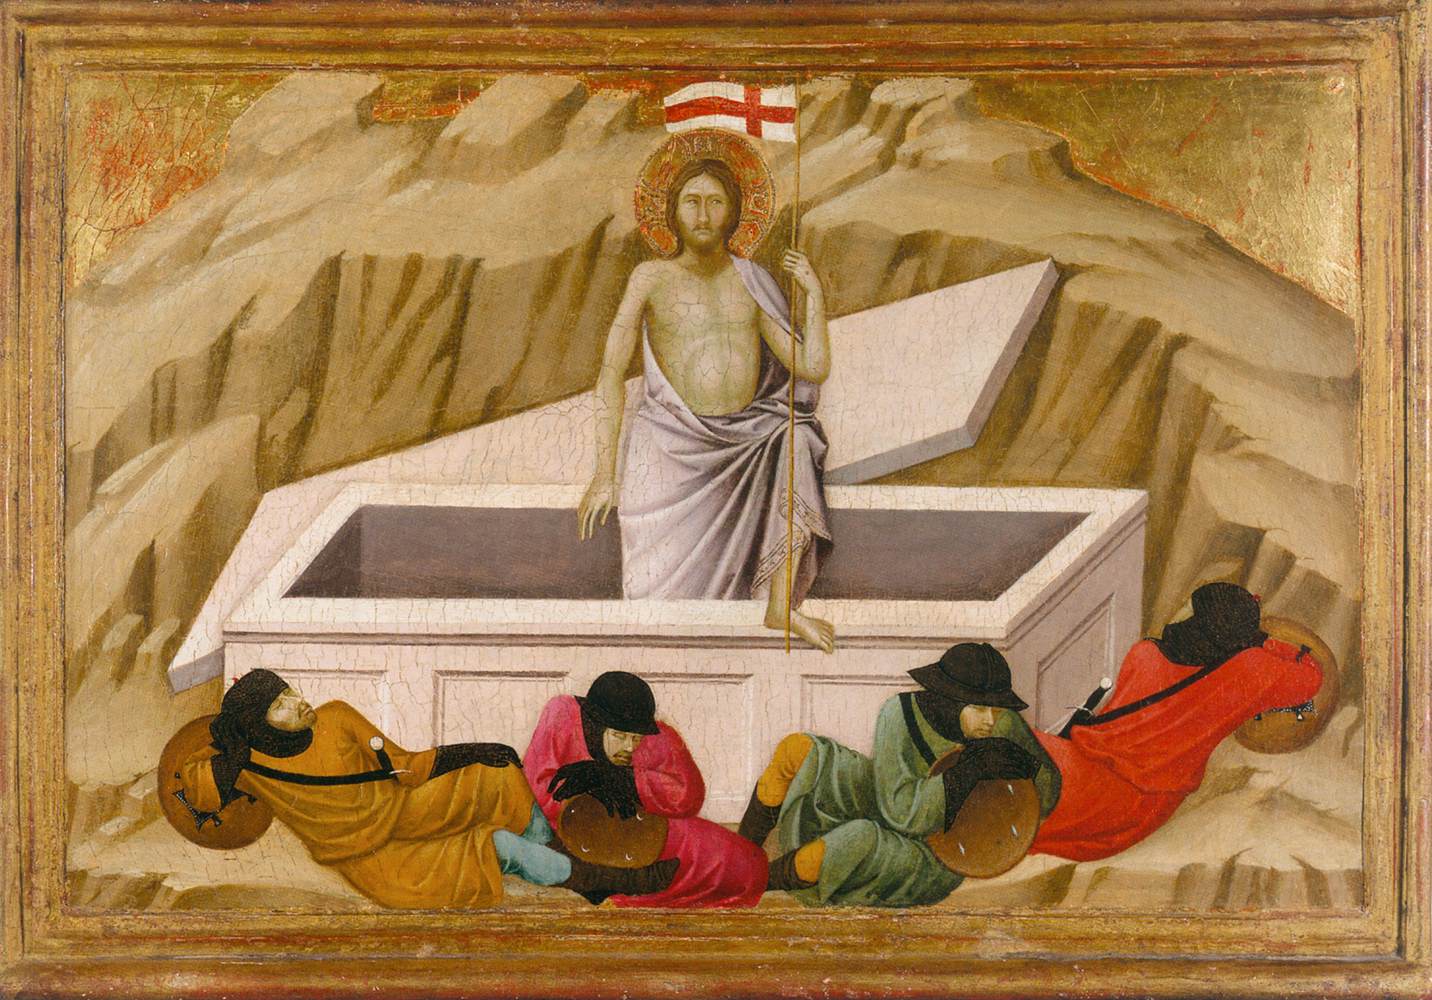 The resurrection